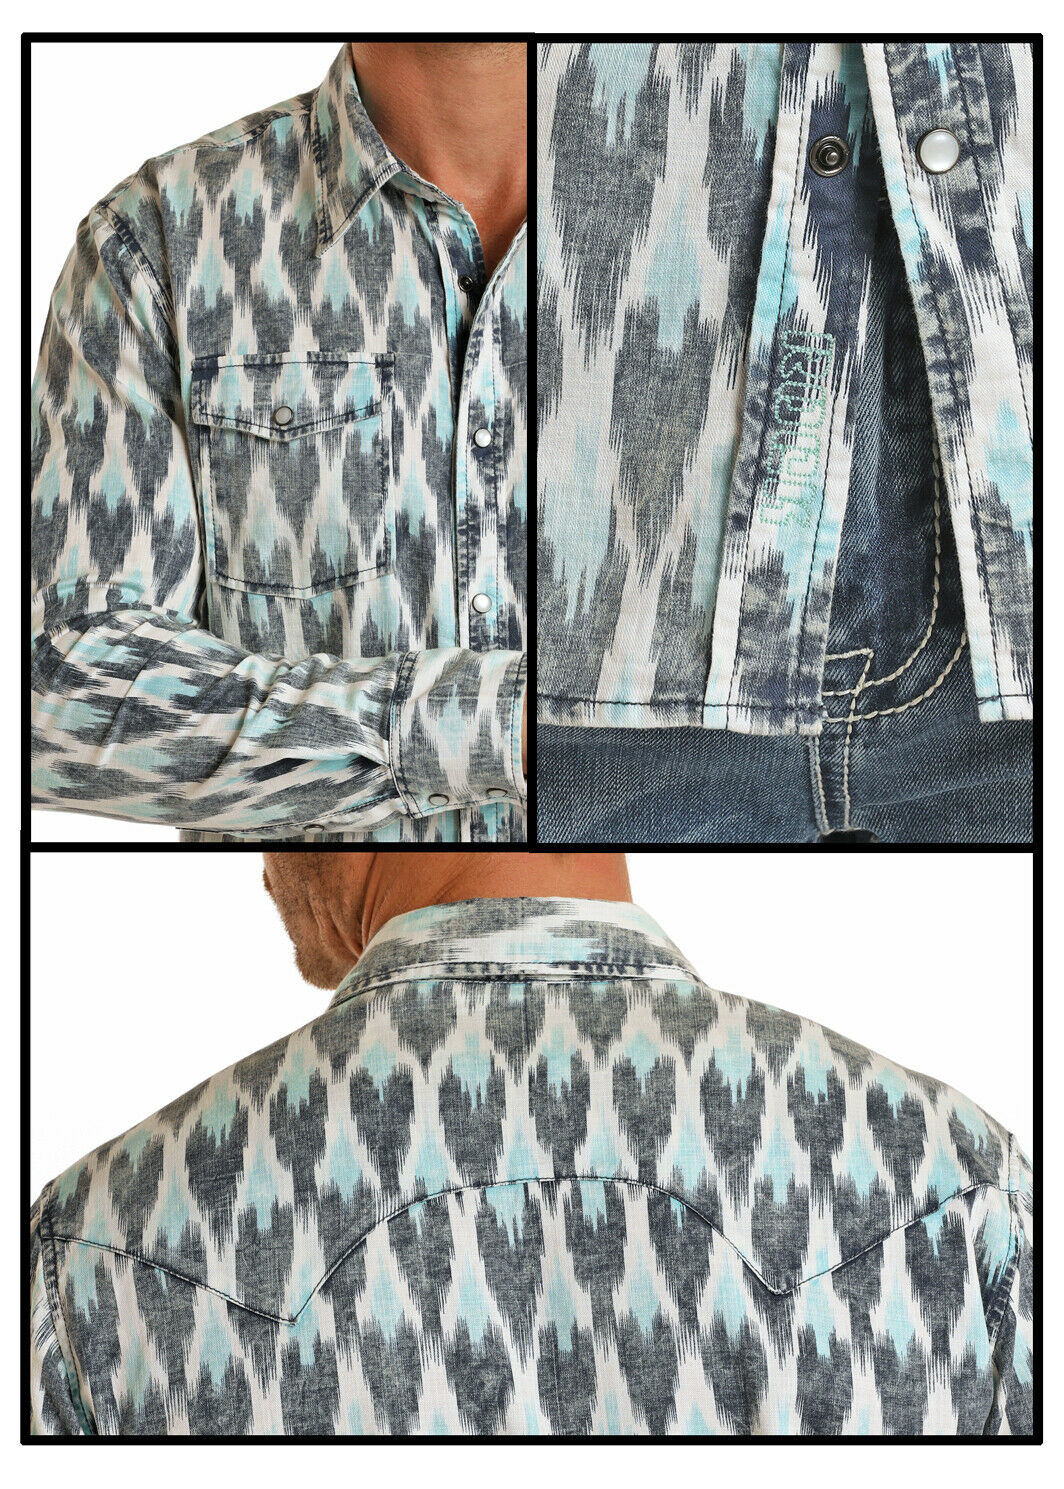 Rock & Roll Cowboy Mens Caribbean Ikat Fabric Snap Shirt B2S4067